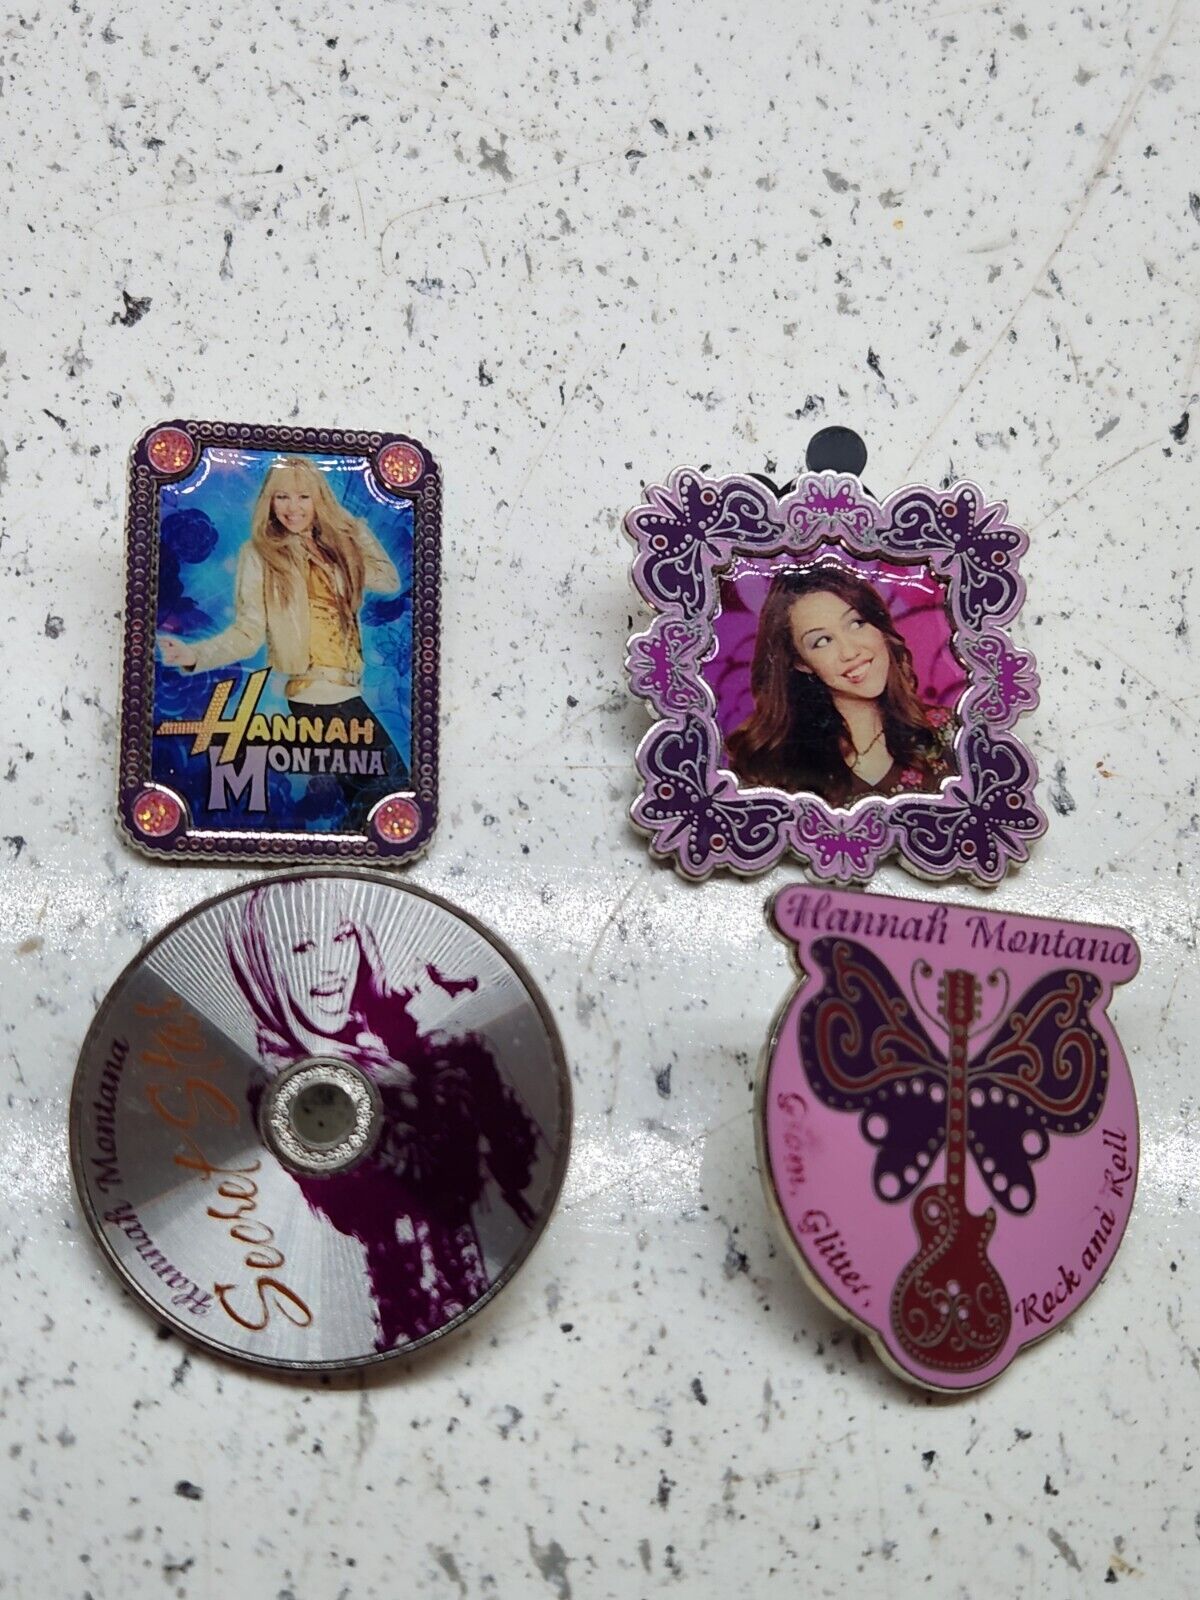 DISNEY PINS HANNAH MONTANA PIN Collection (4 Pins) All From 2008 - Miley Cyrus